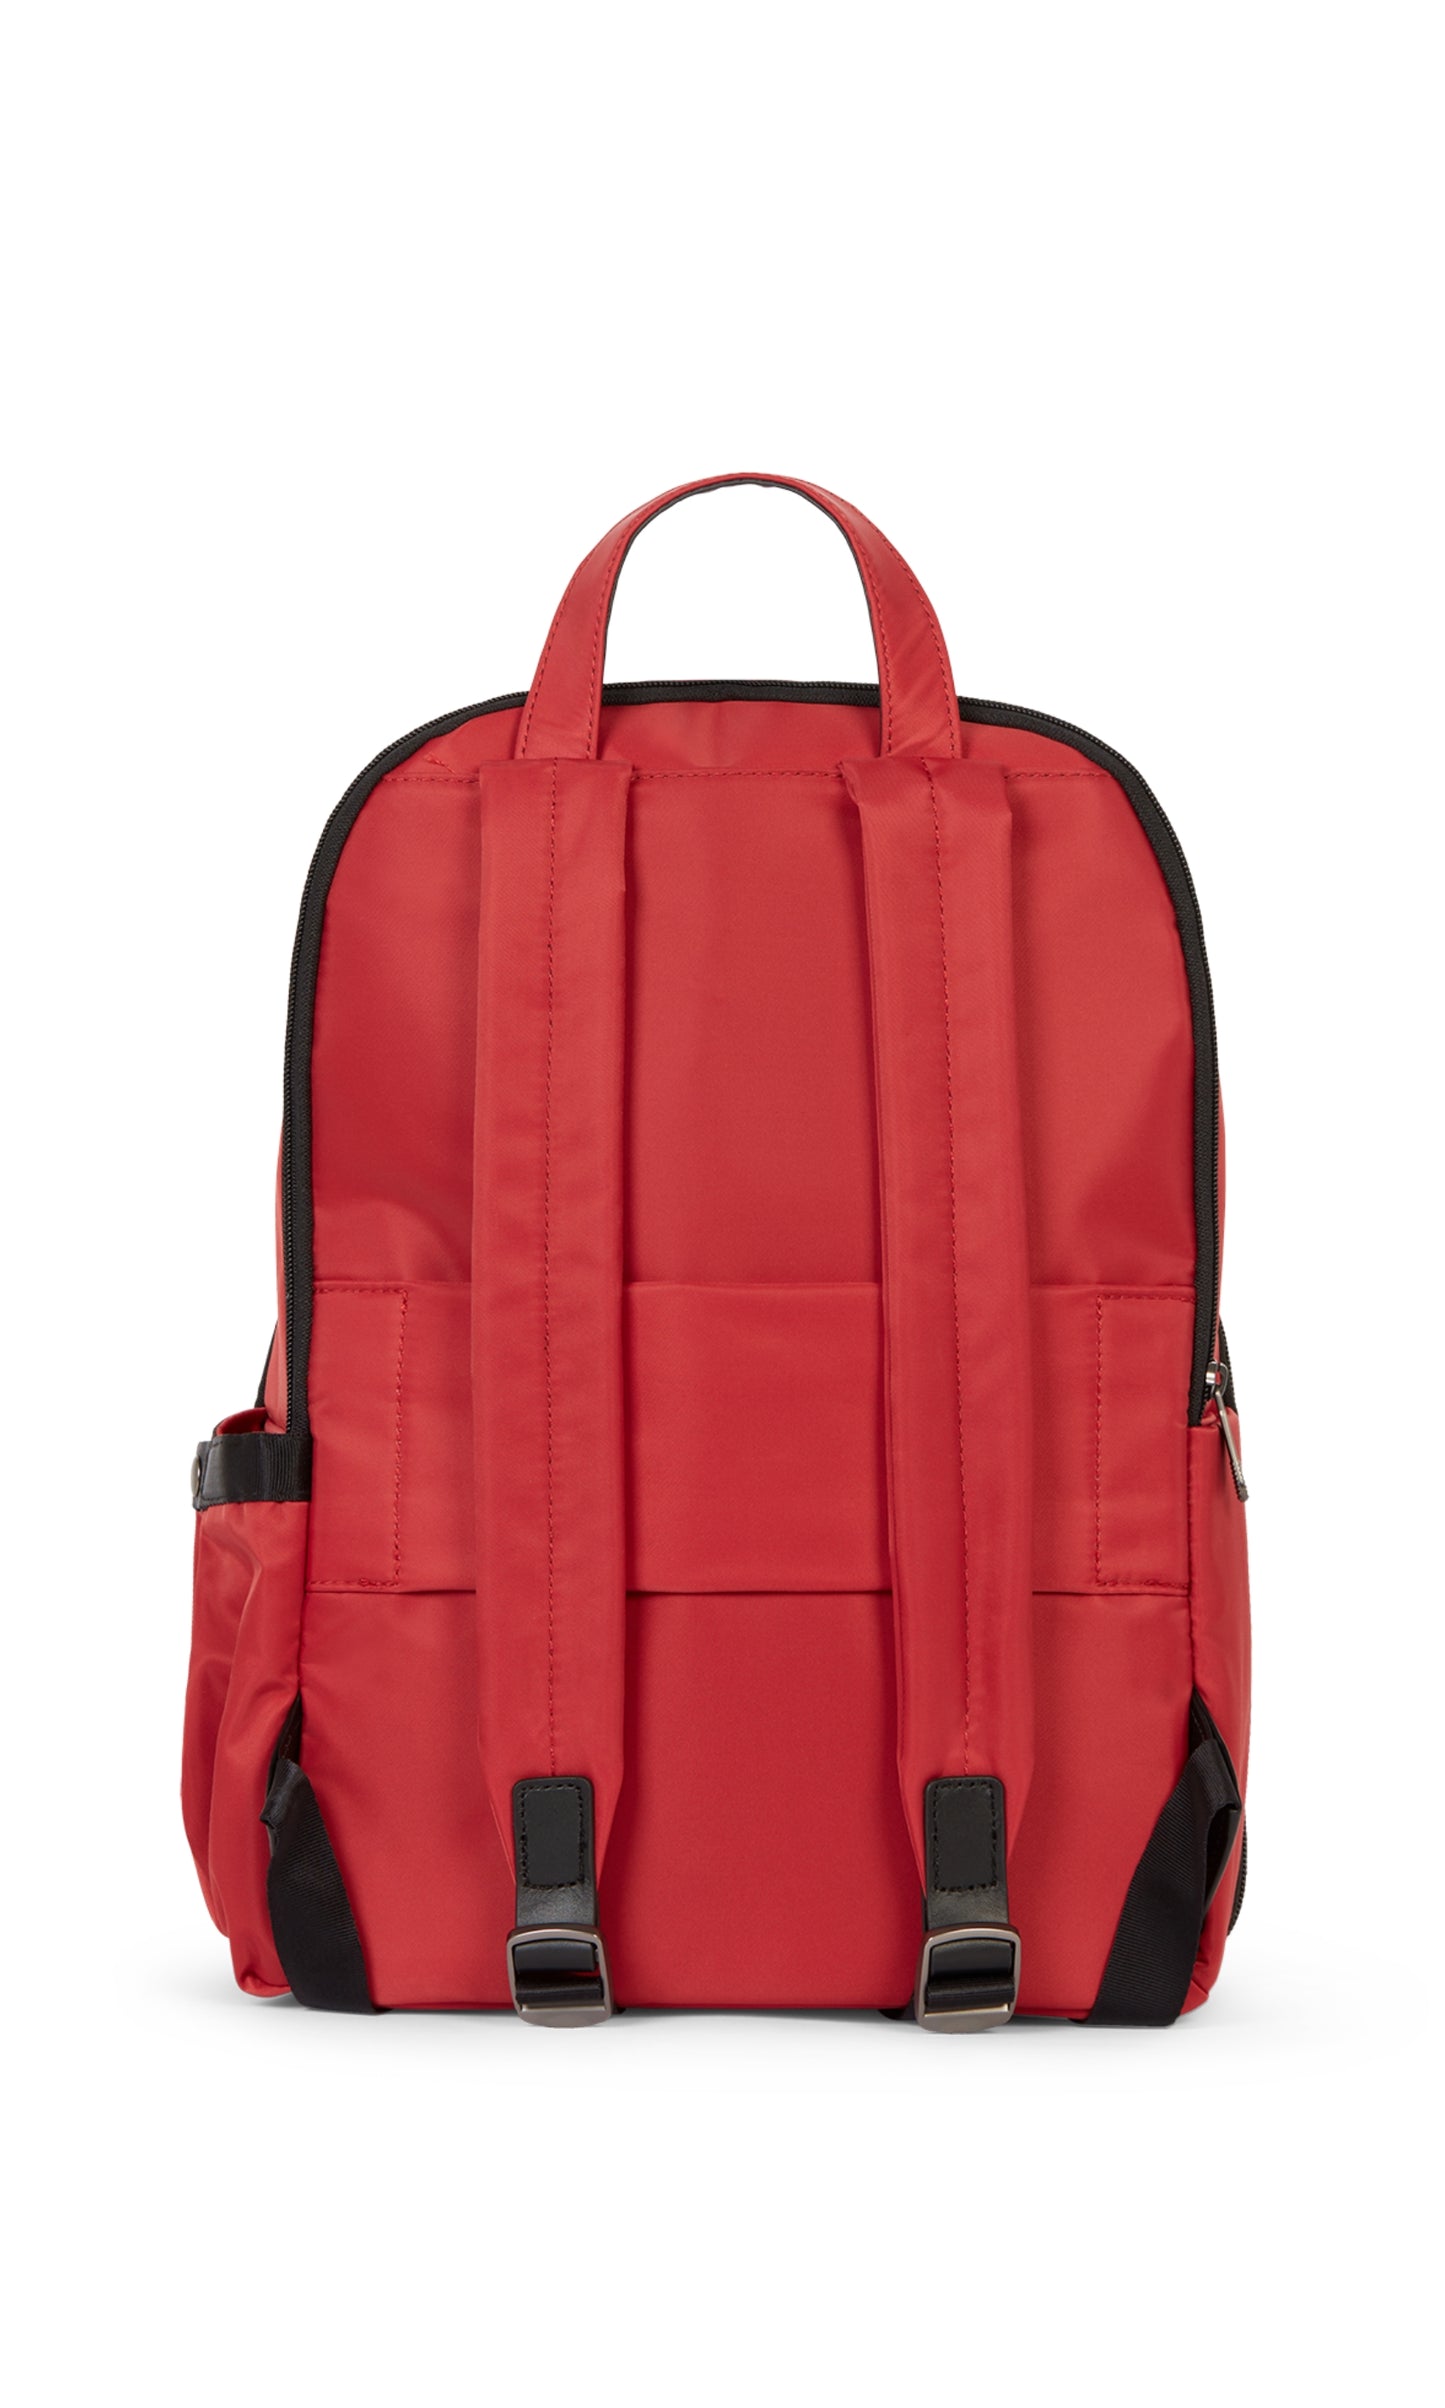 Chelsea backpack in poppy